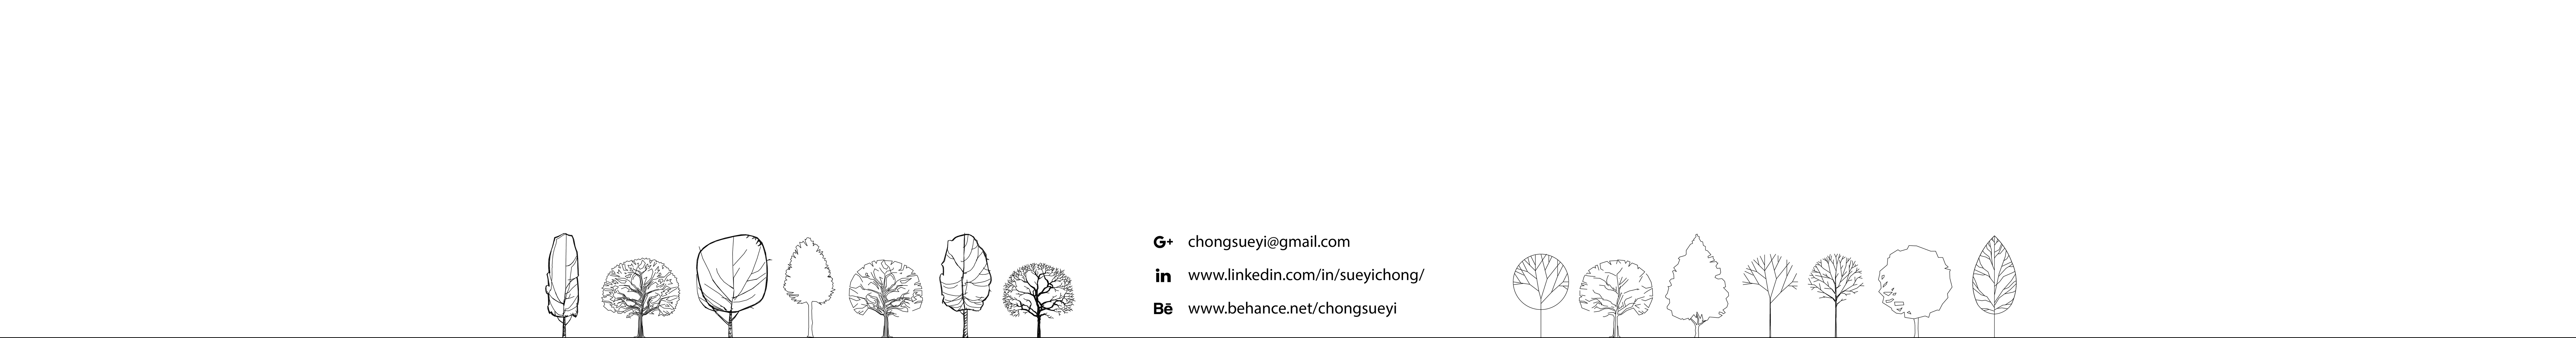 Profil-Banner von Sueyi Chong